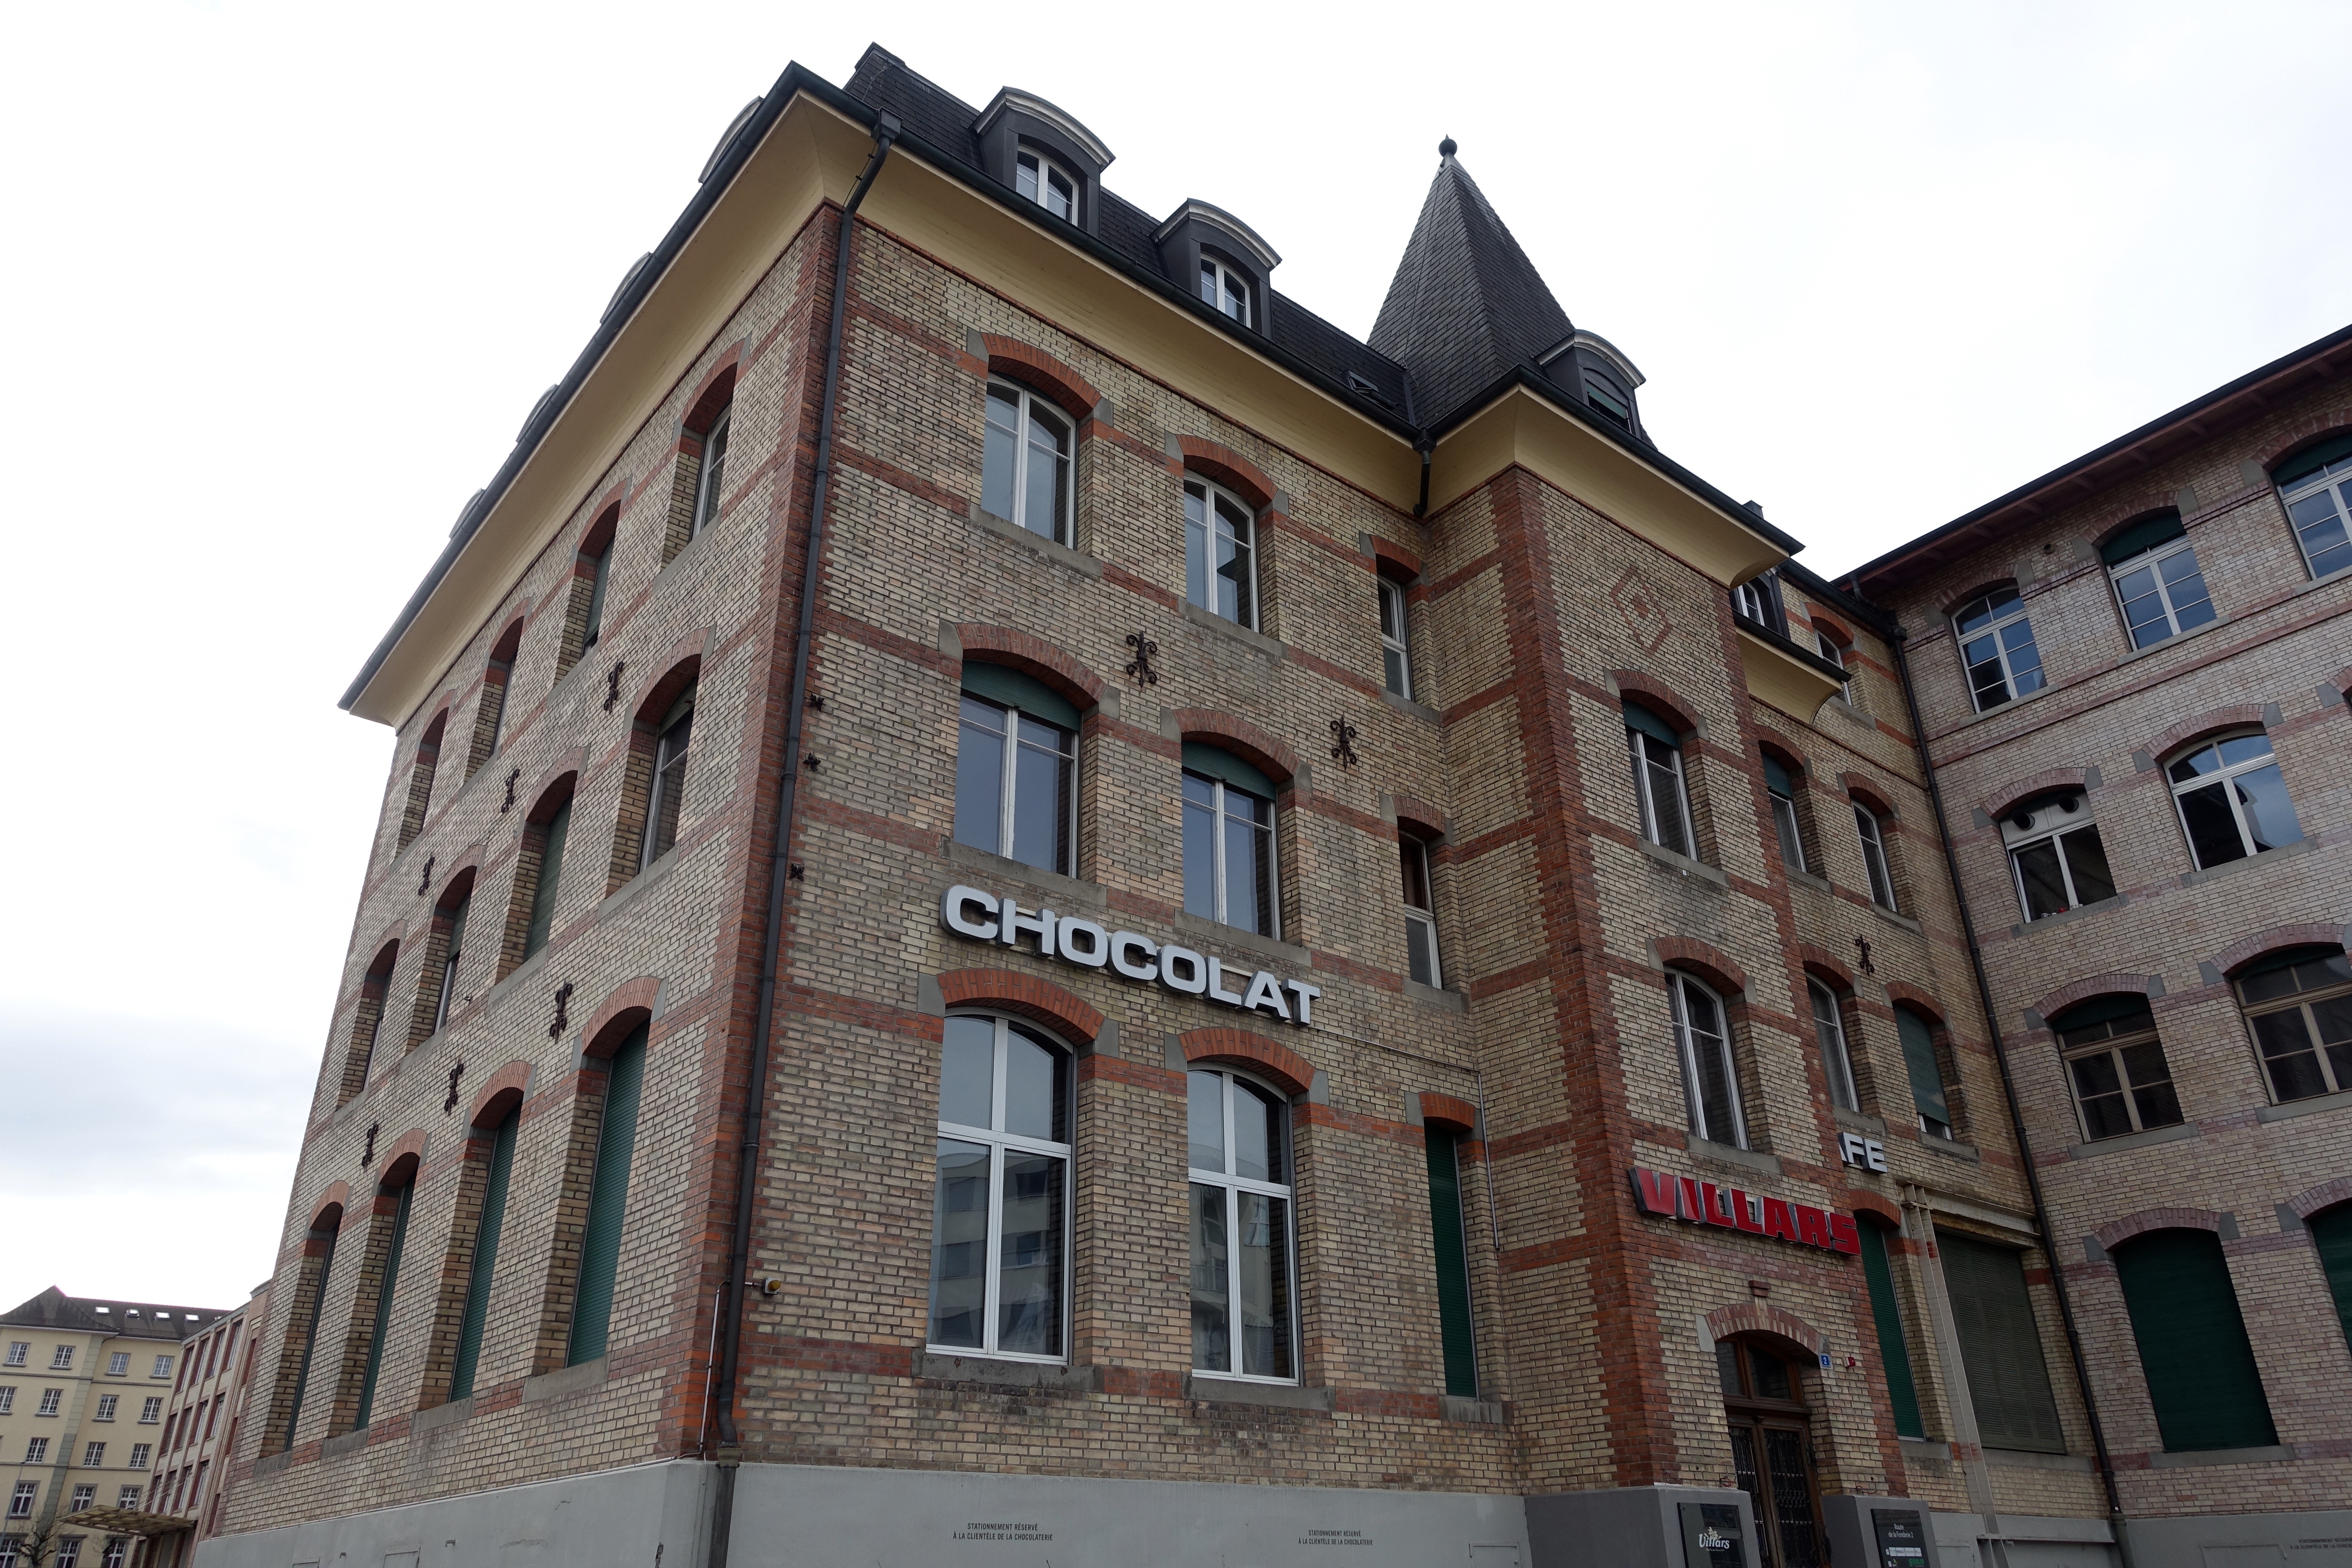 Die Schokoladenfabrik Villars an der Route de la Fonderie.